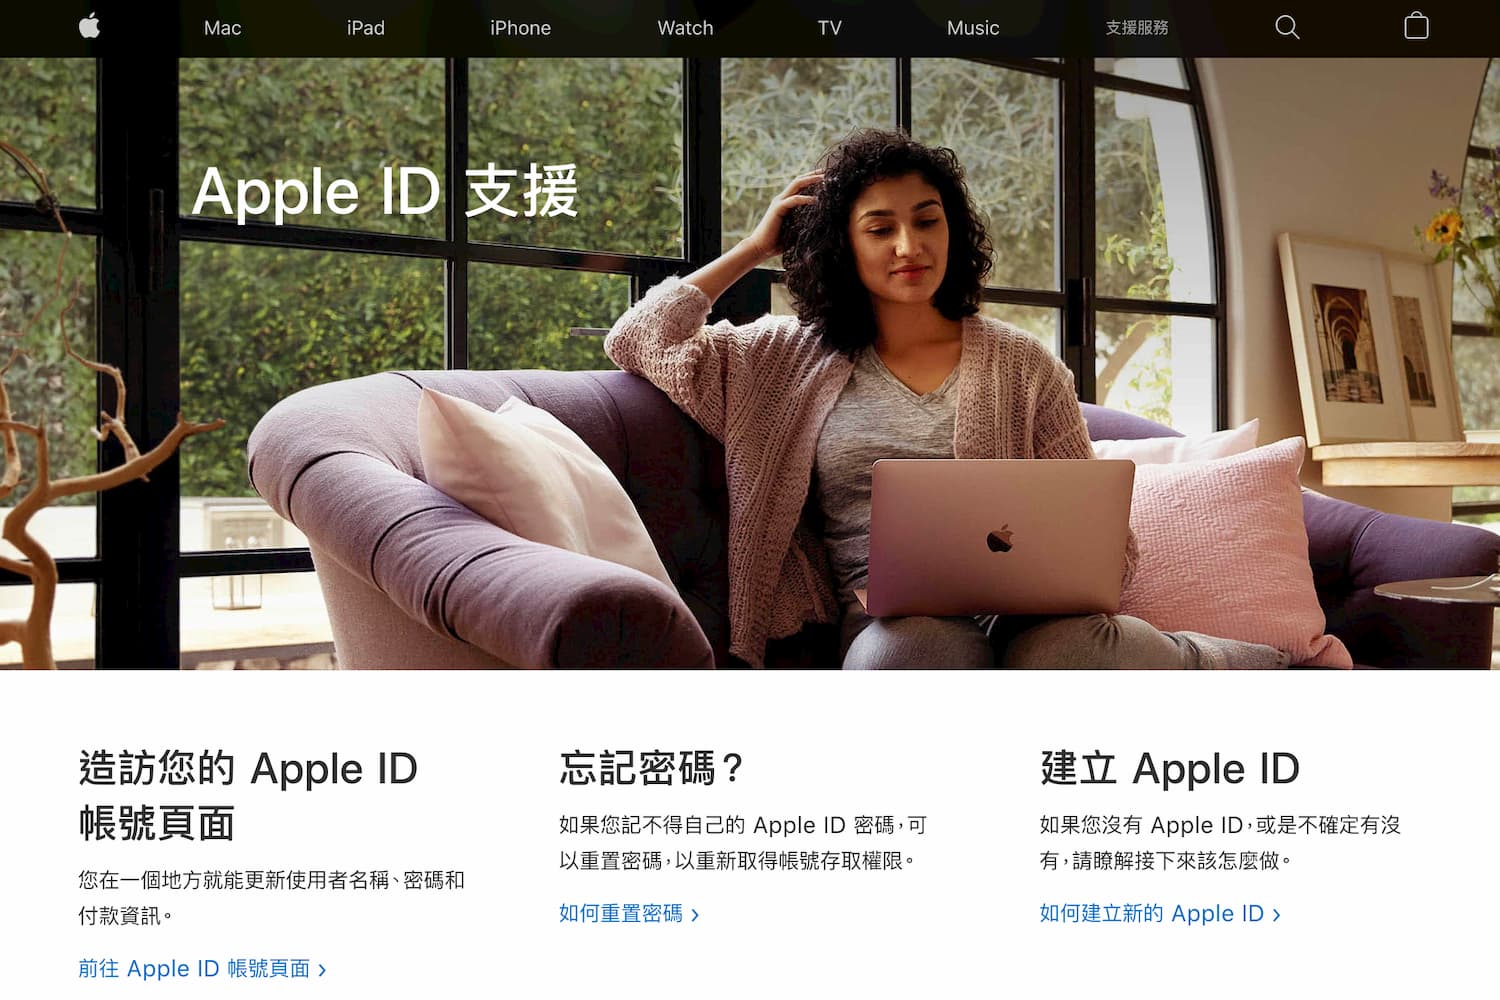 Apple ID 支援